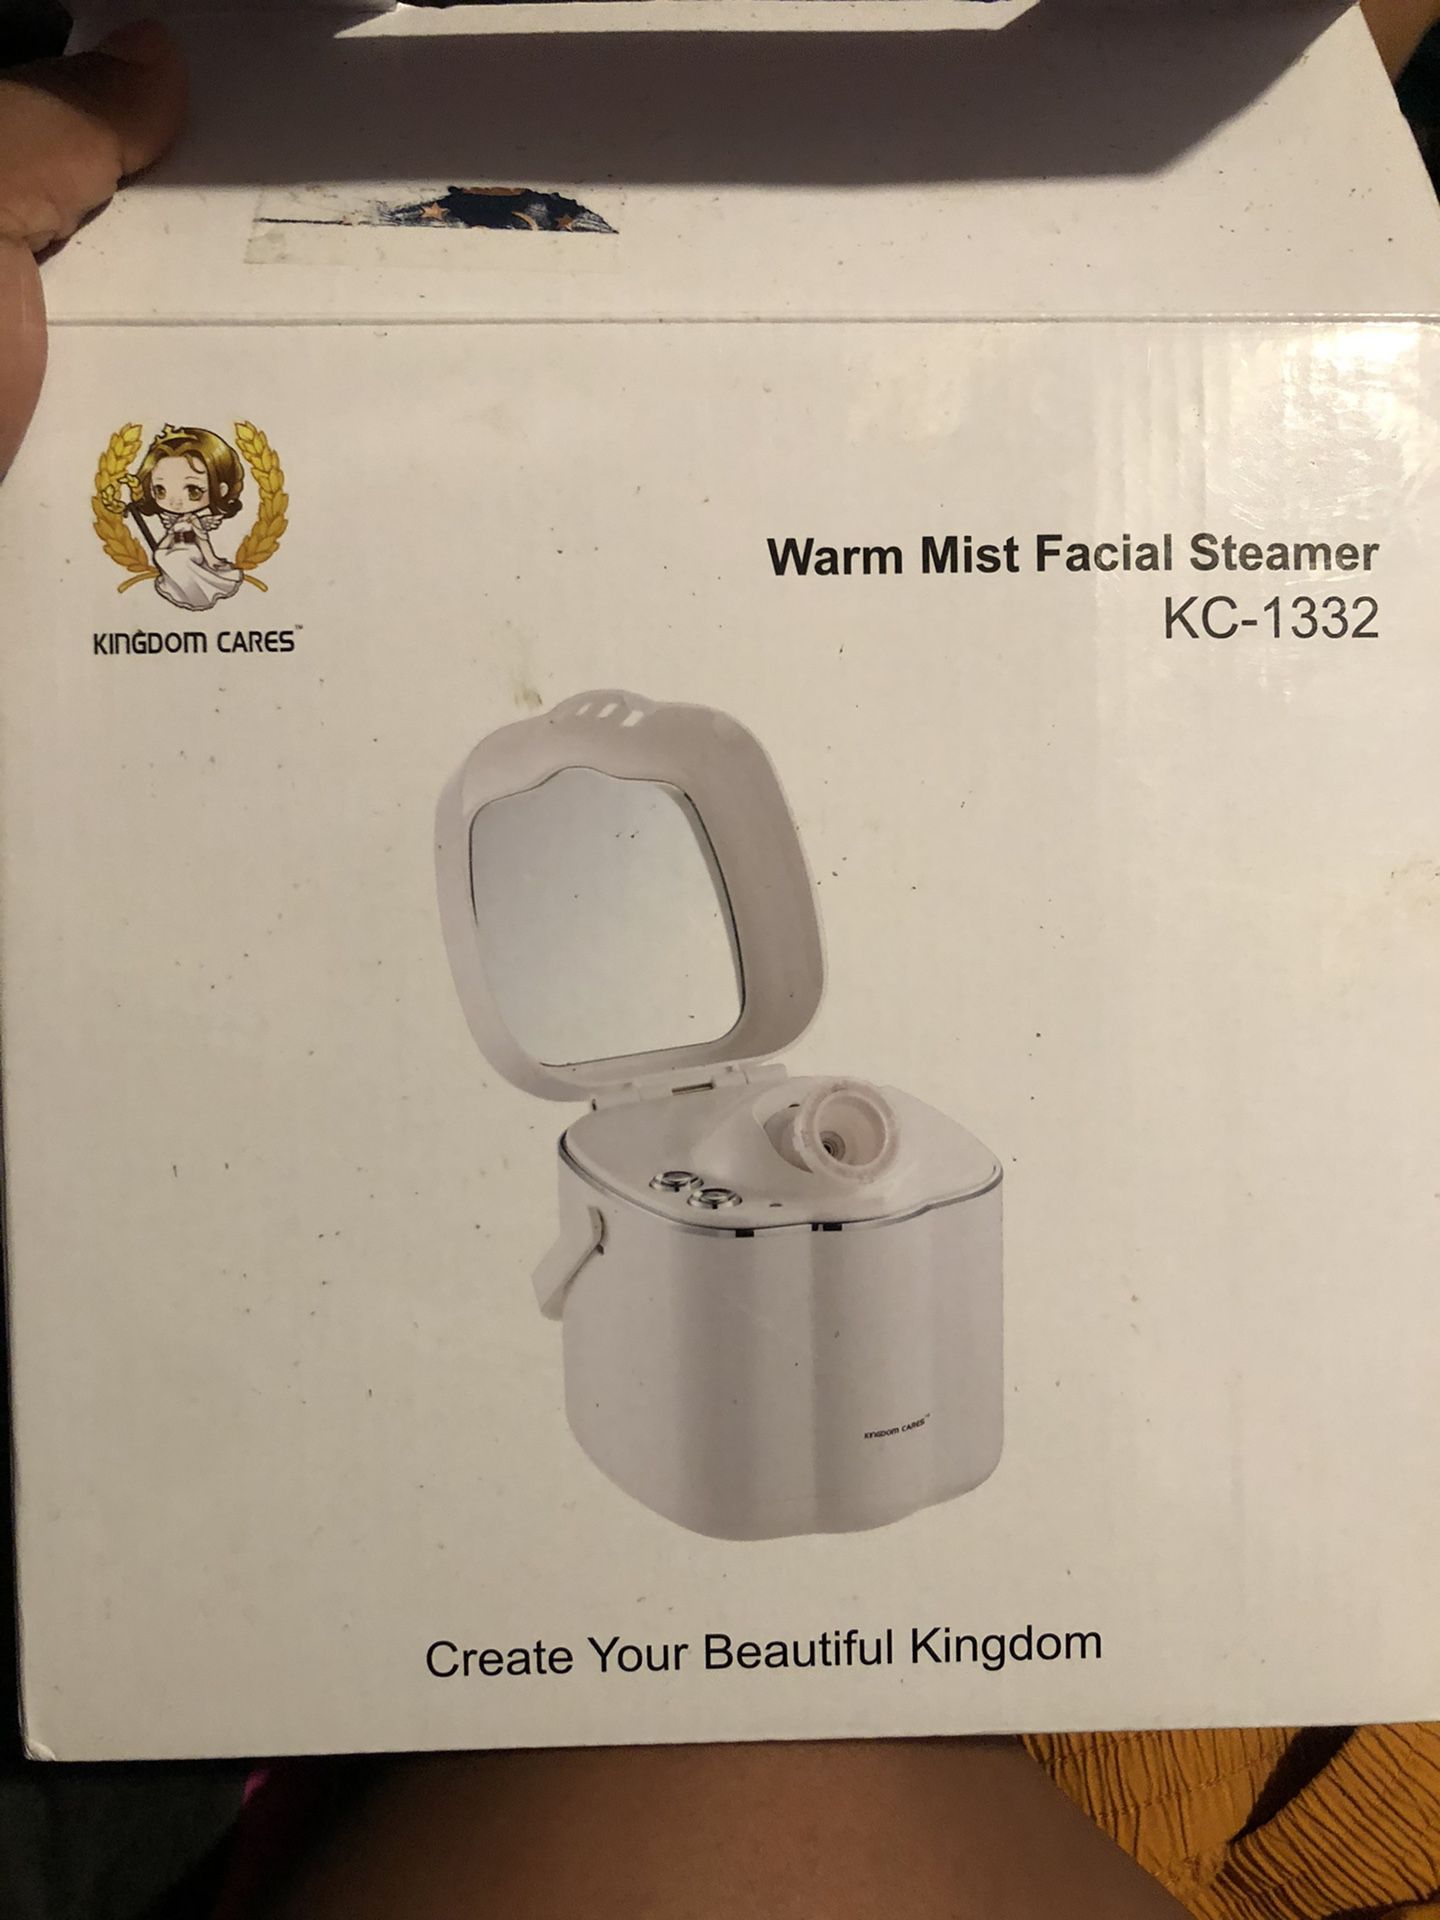 Warm mist facial steamer